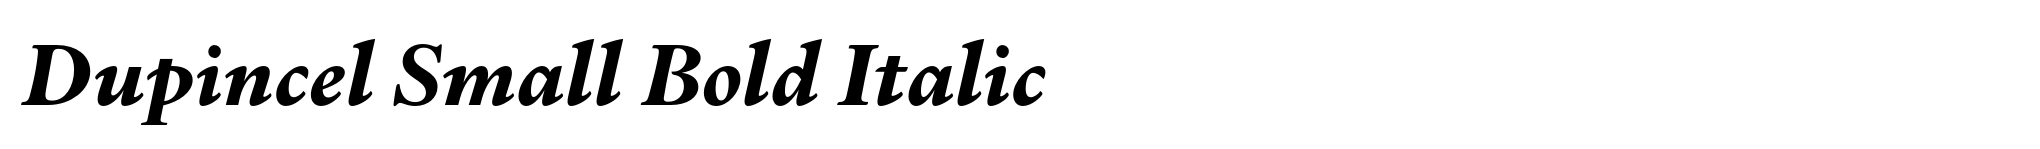 Dupincel Small Bold Italic image